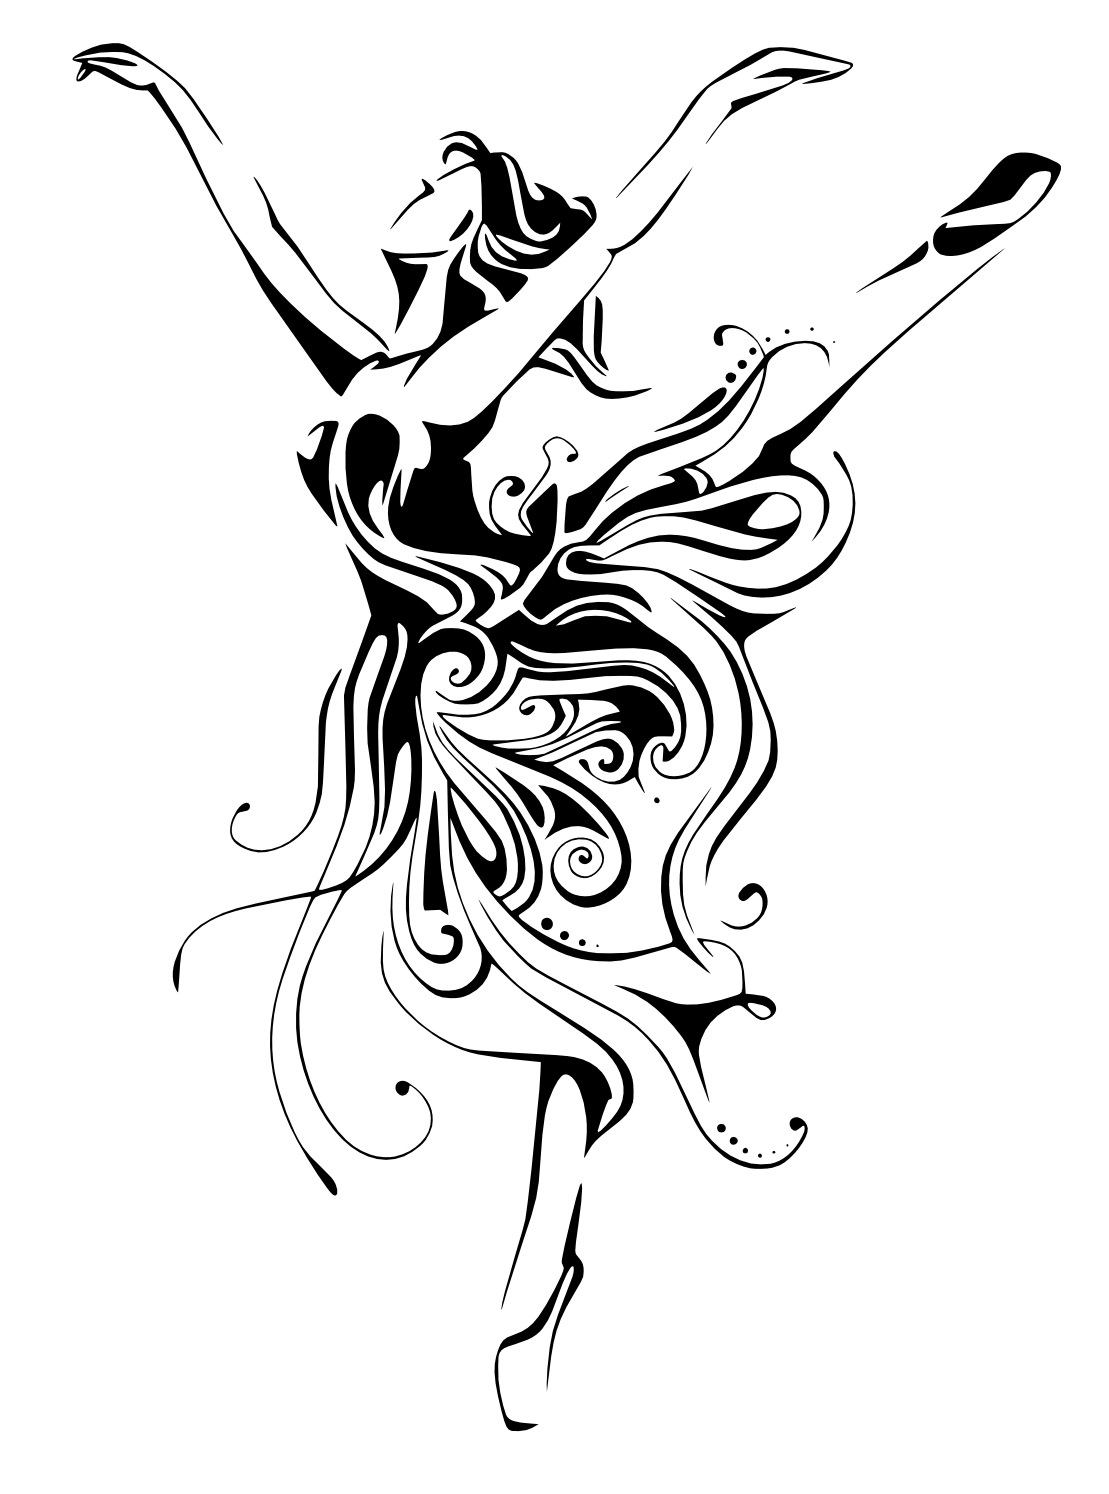 Ballerina Female Dancer Free Vector cdr Download - 3axis.co